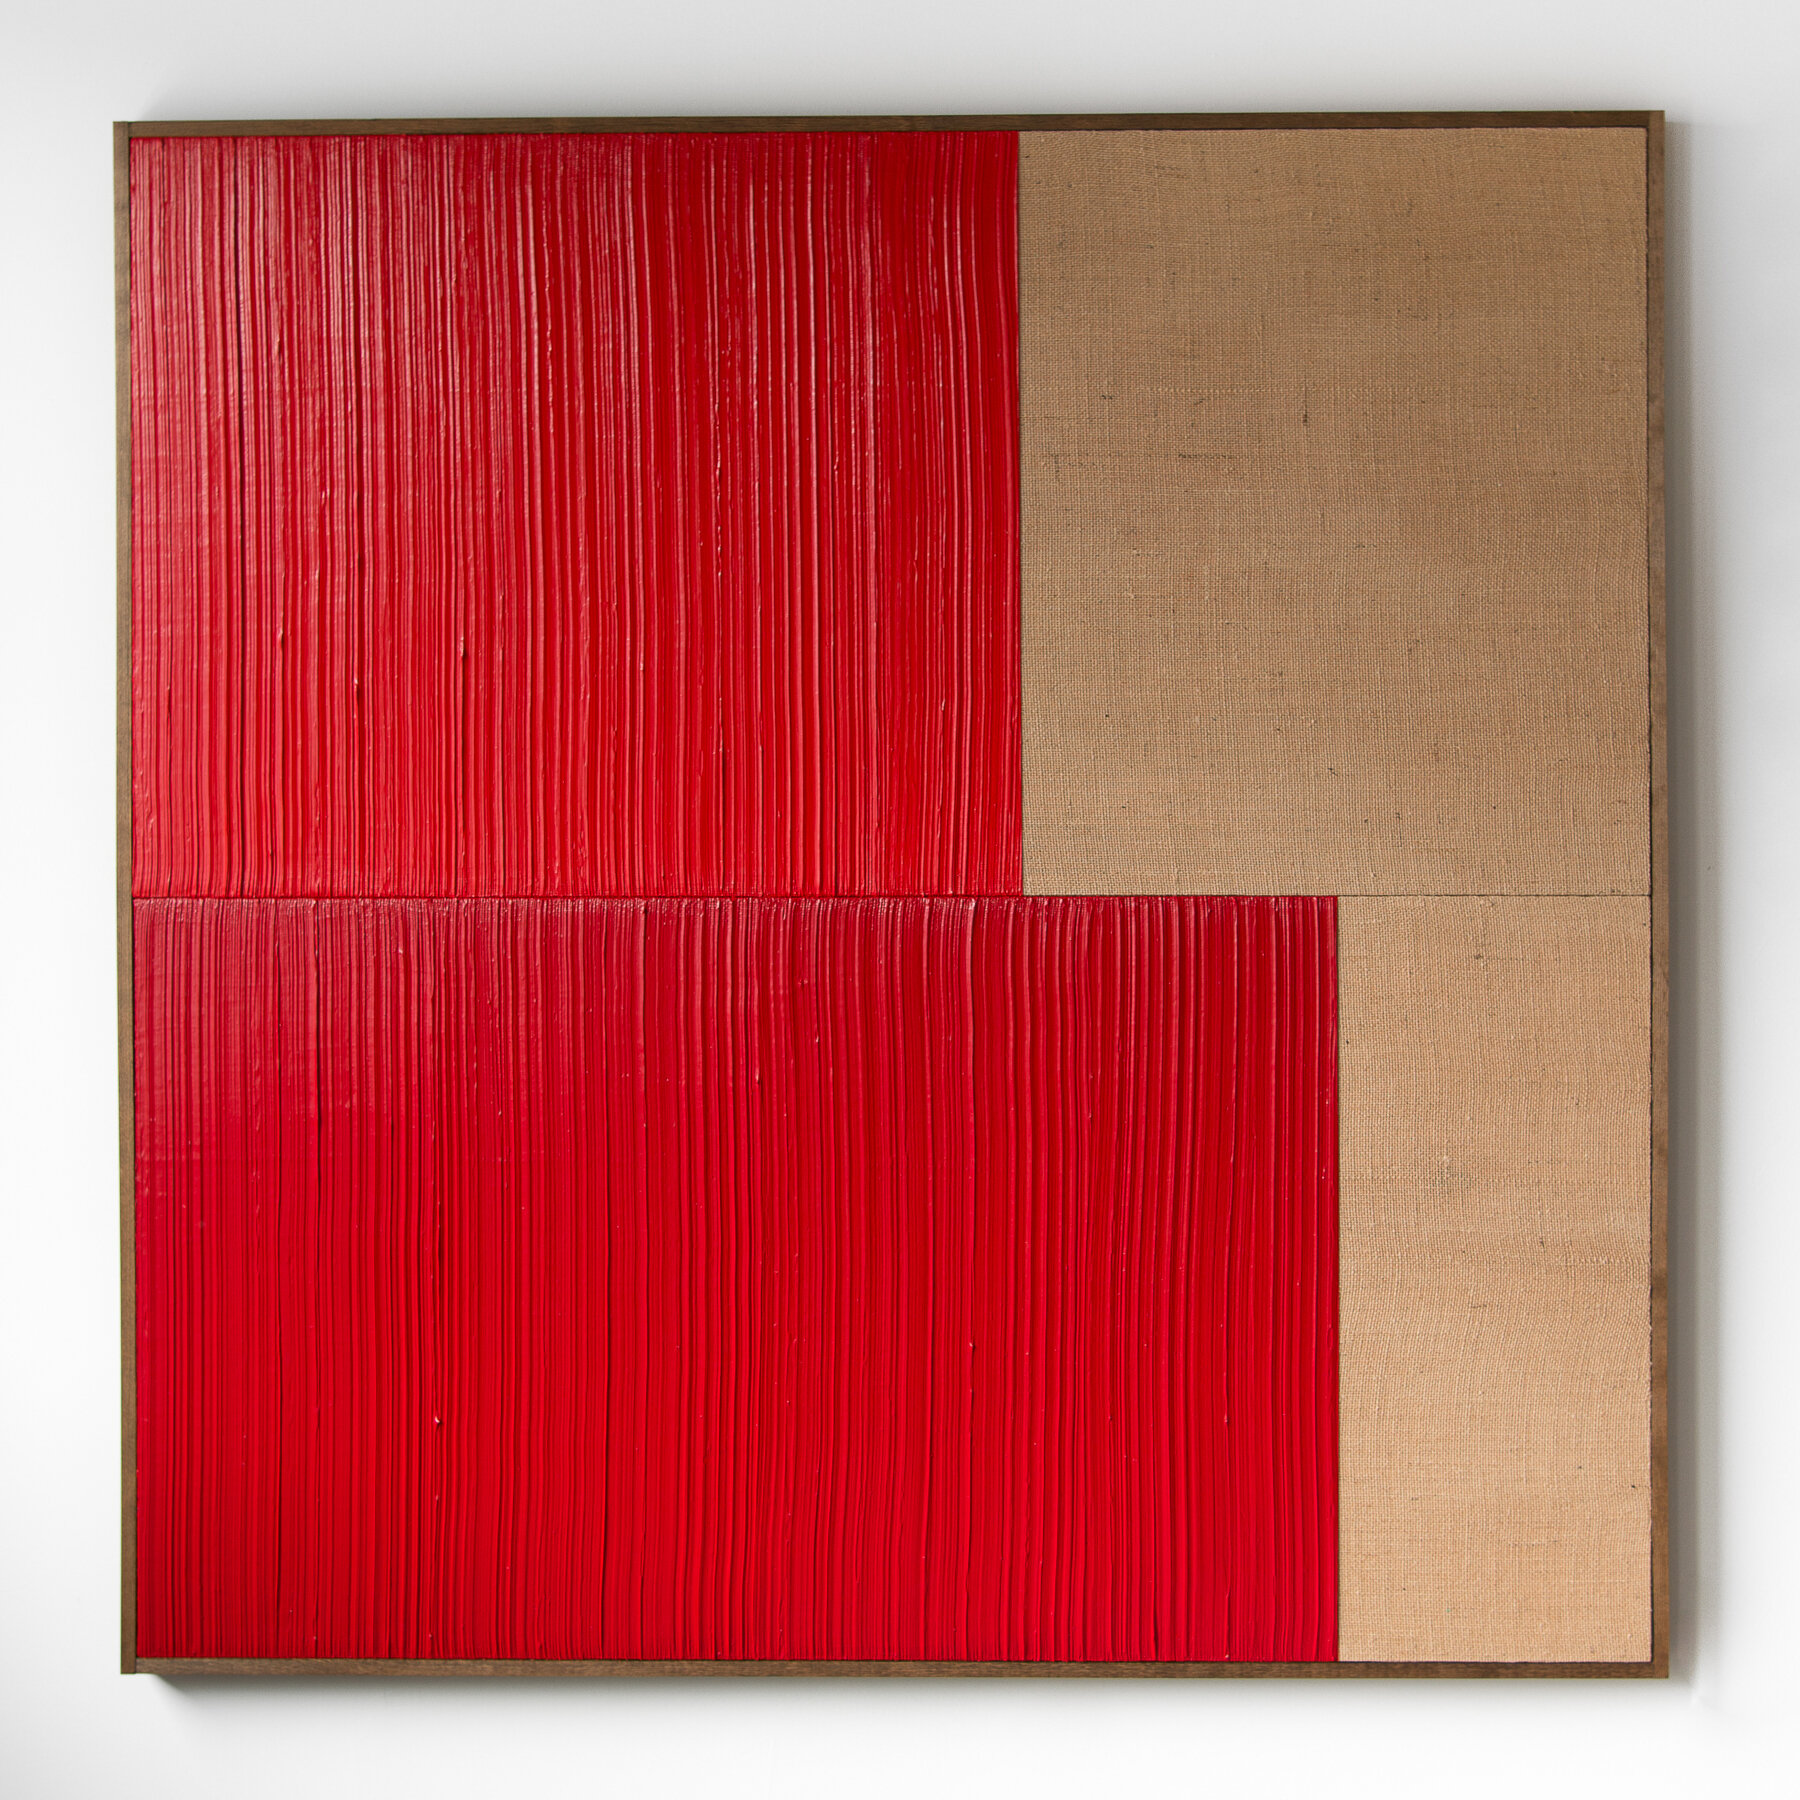  JOHNNY ABRAHAMS  Untitled (Red) , 2020 acrylic on burlap, 48" x 48" 